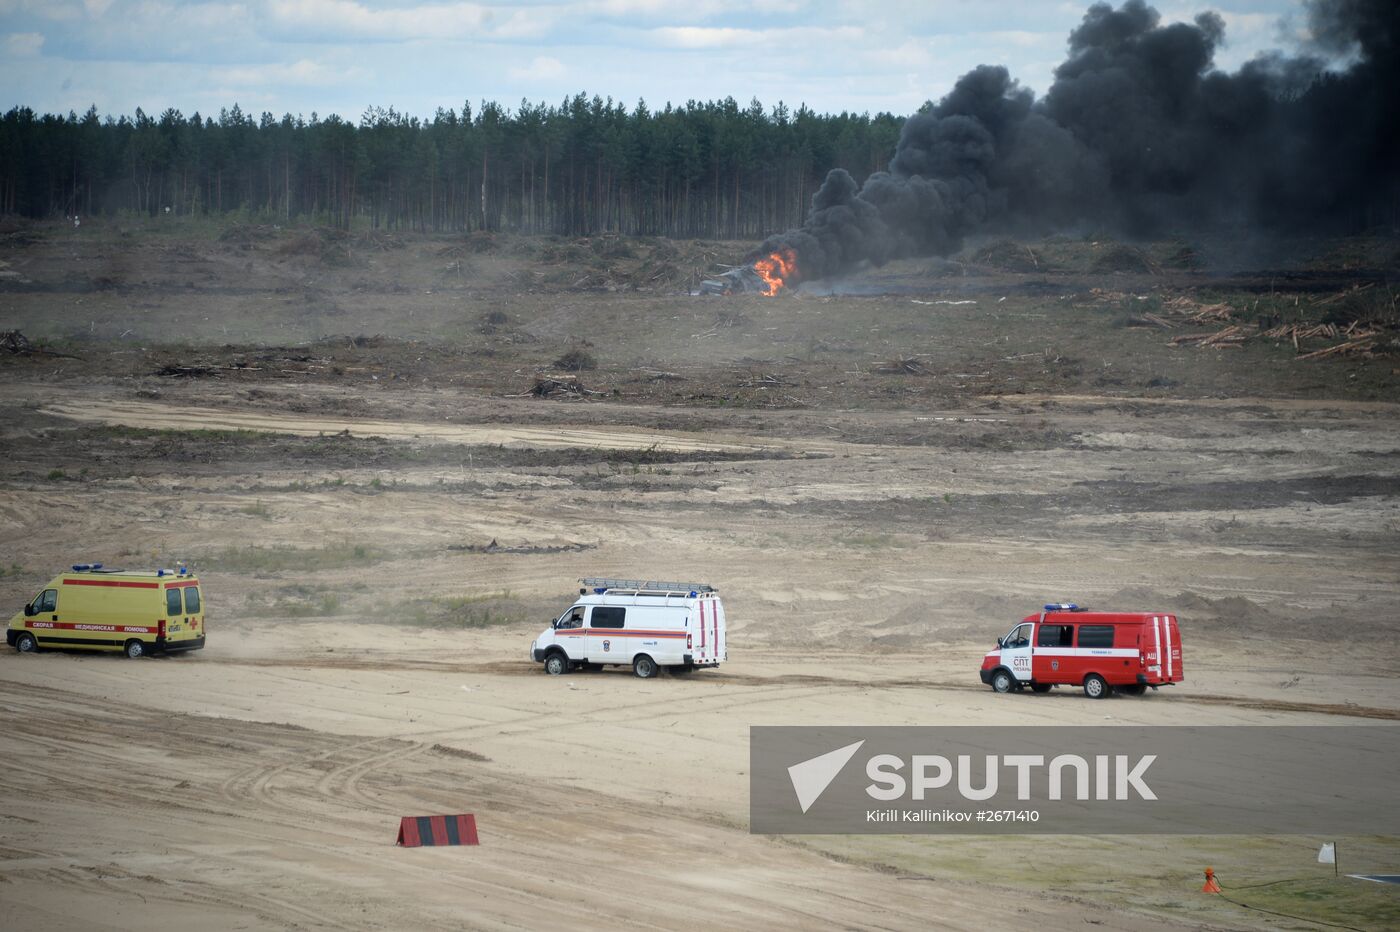 MI-28 helicopter crashes in Ryazan Region